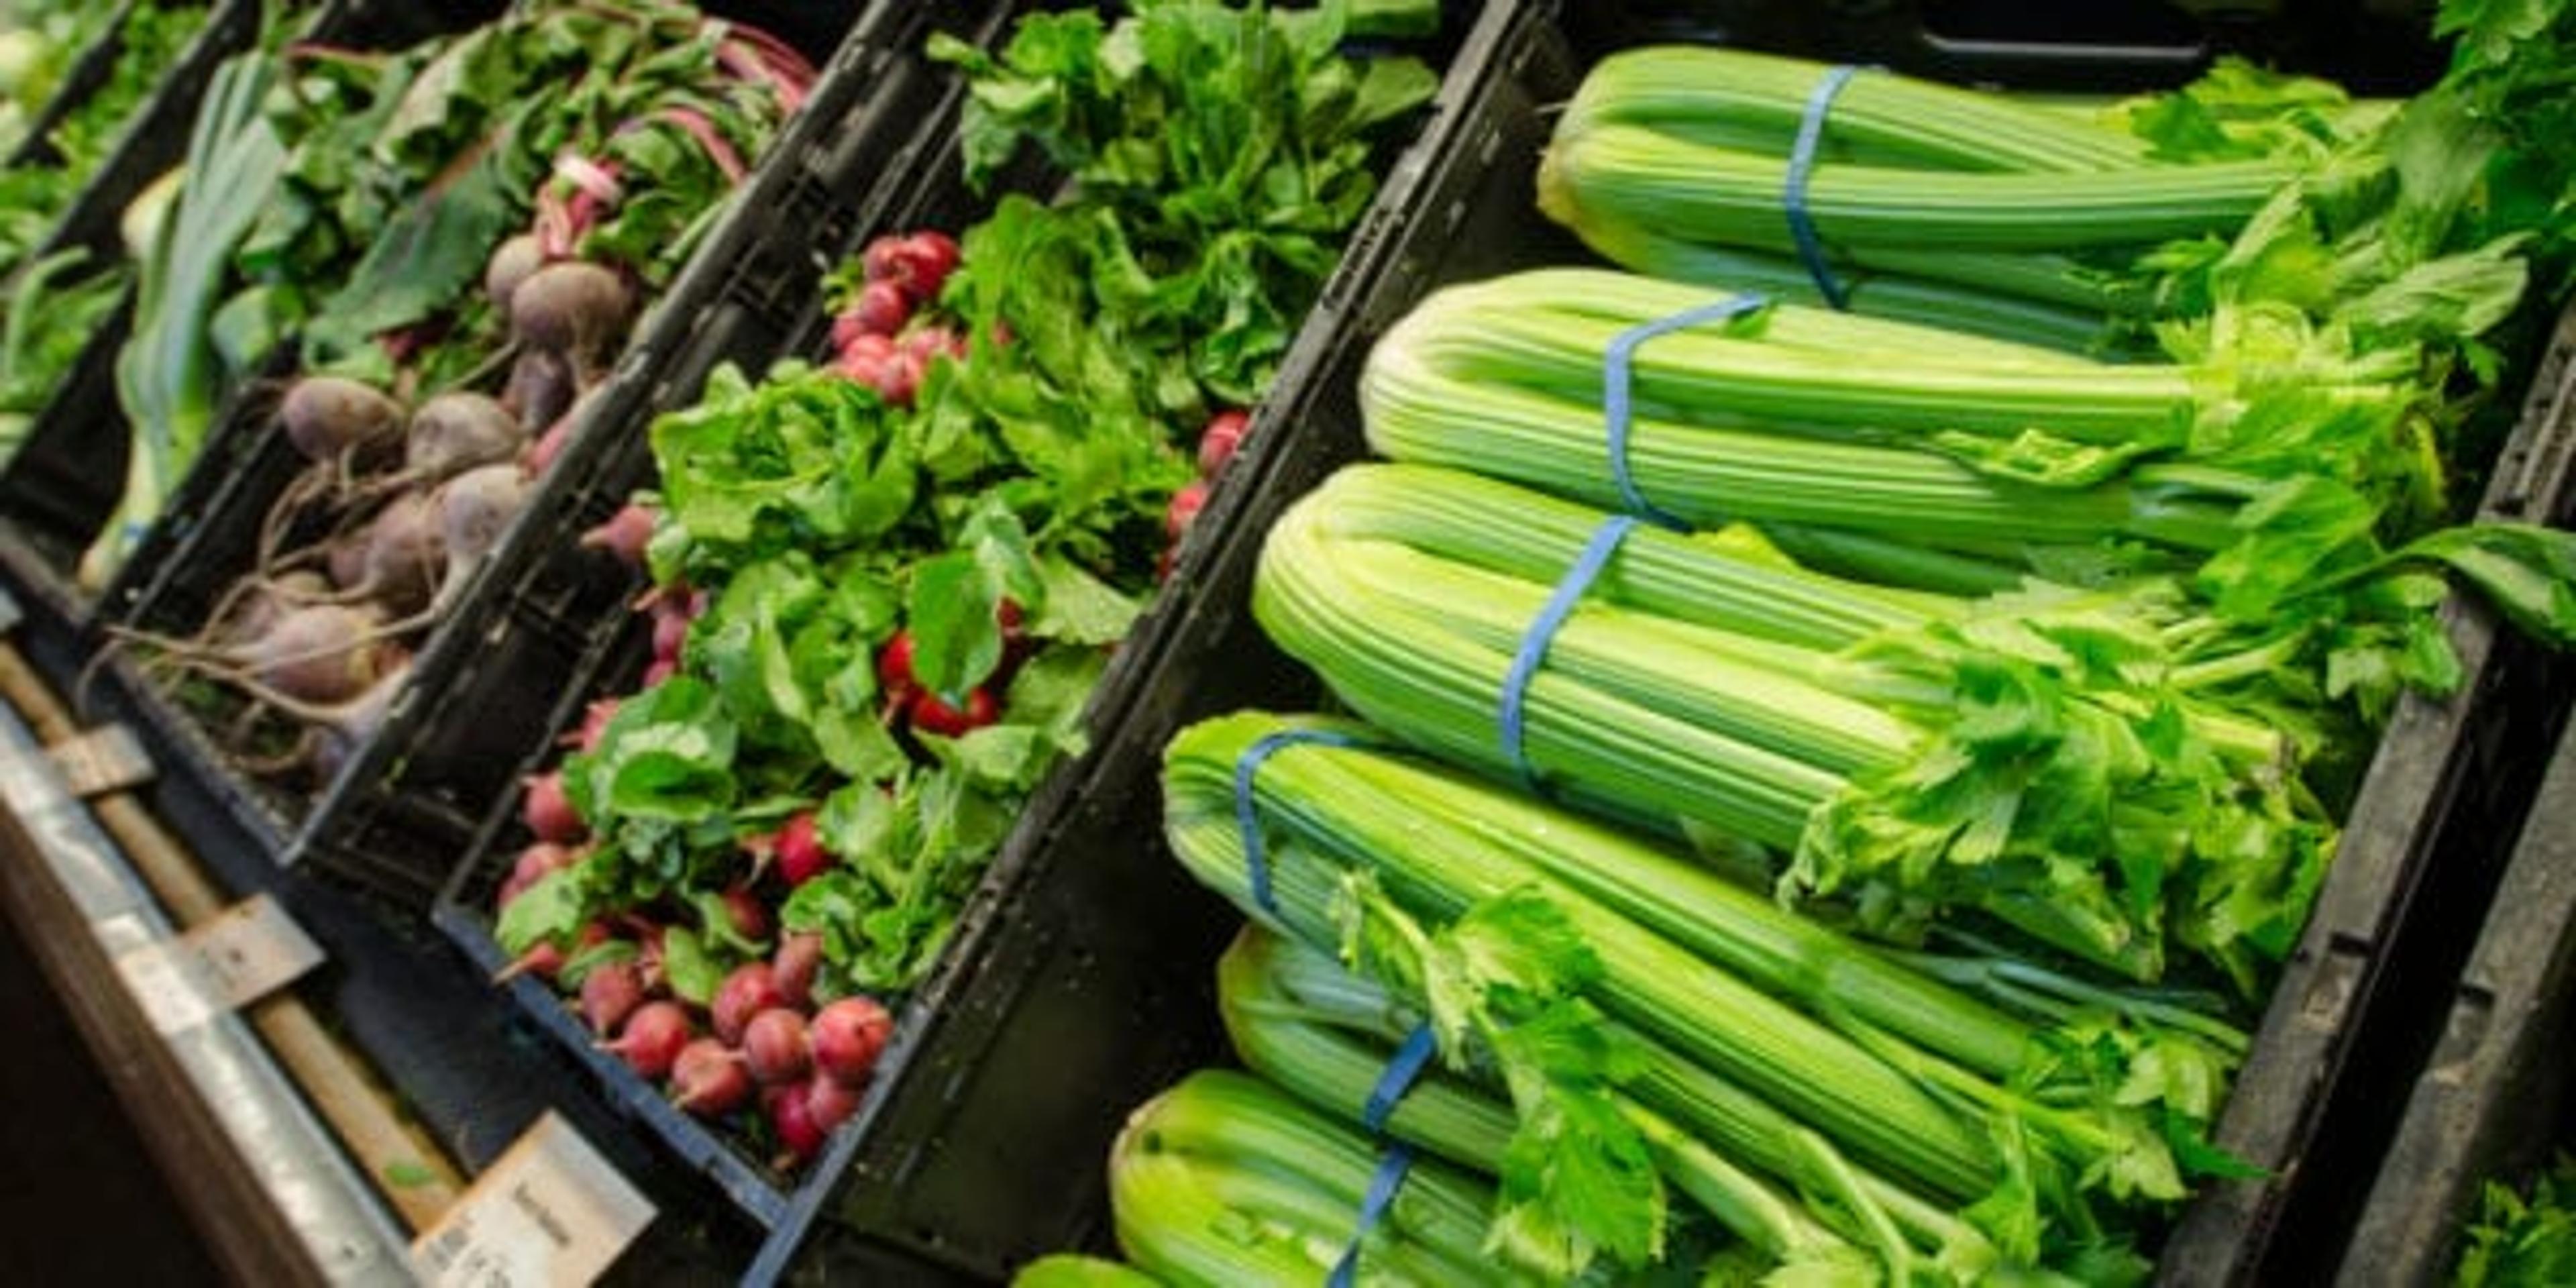 Nutritional benefits of celery